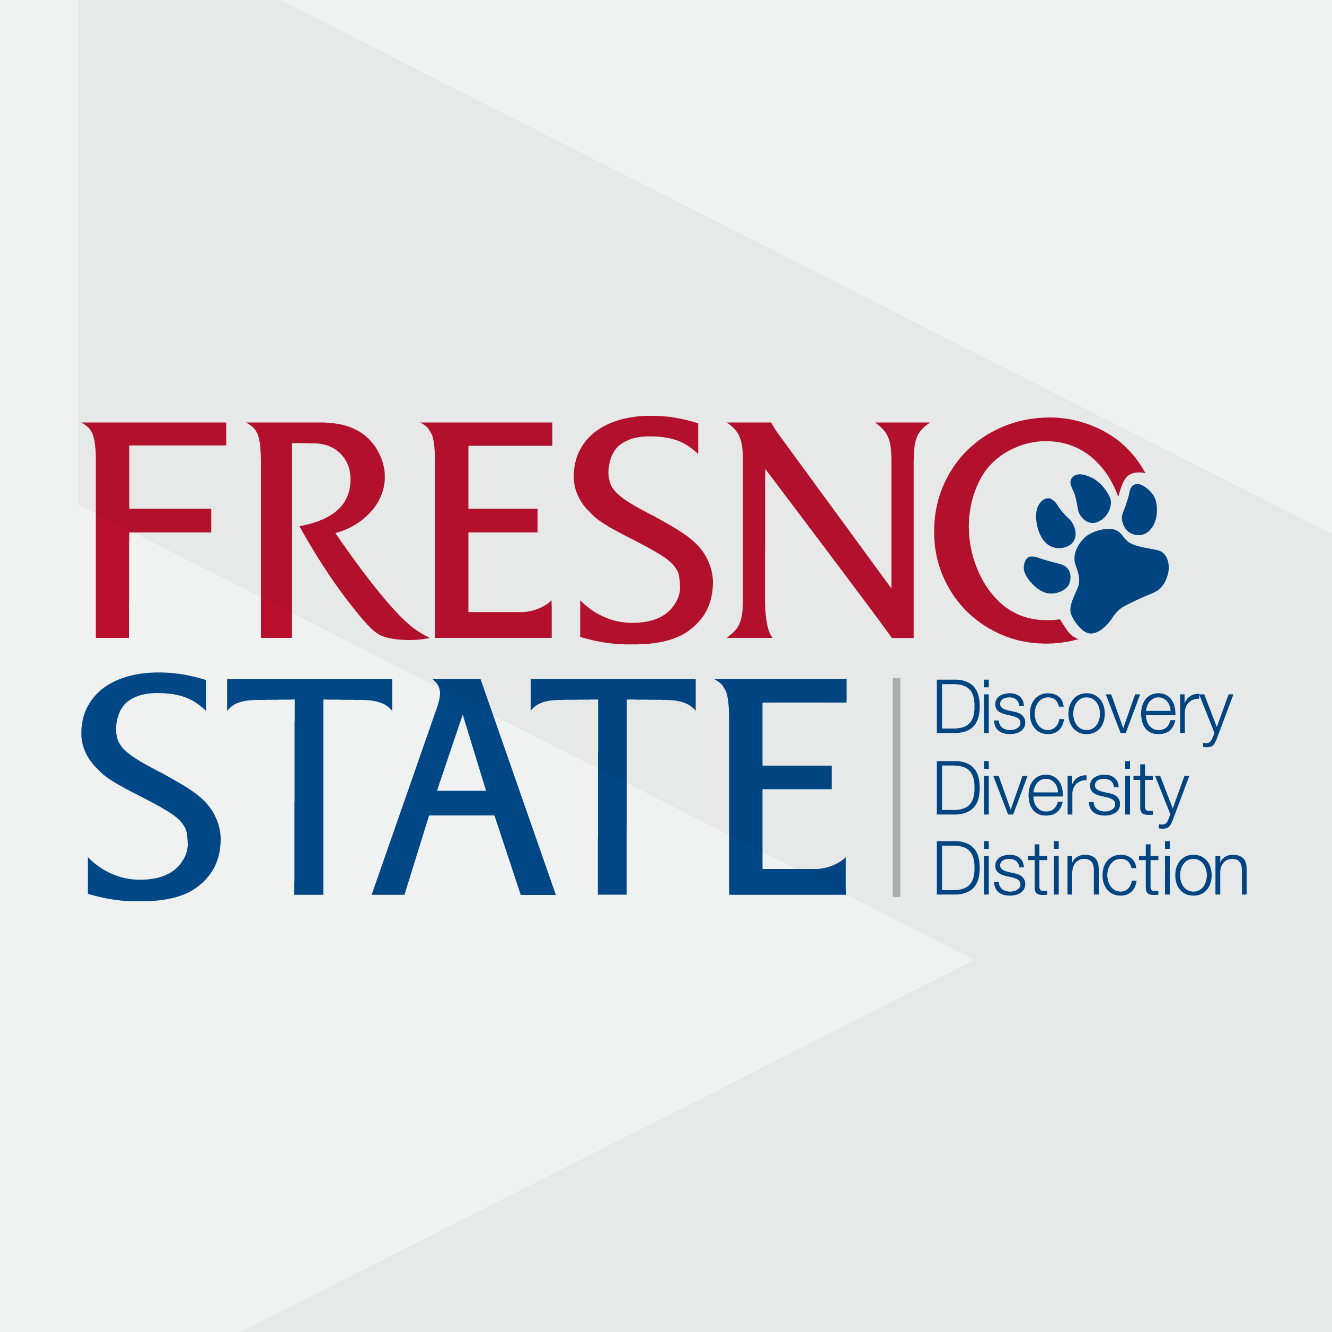 Fresno State case study